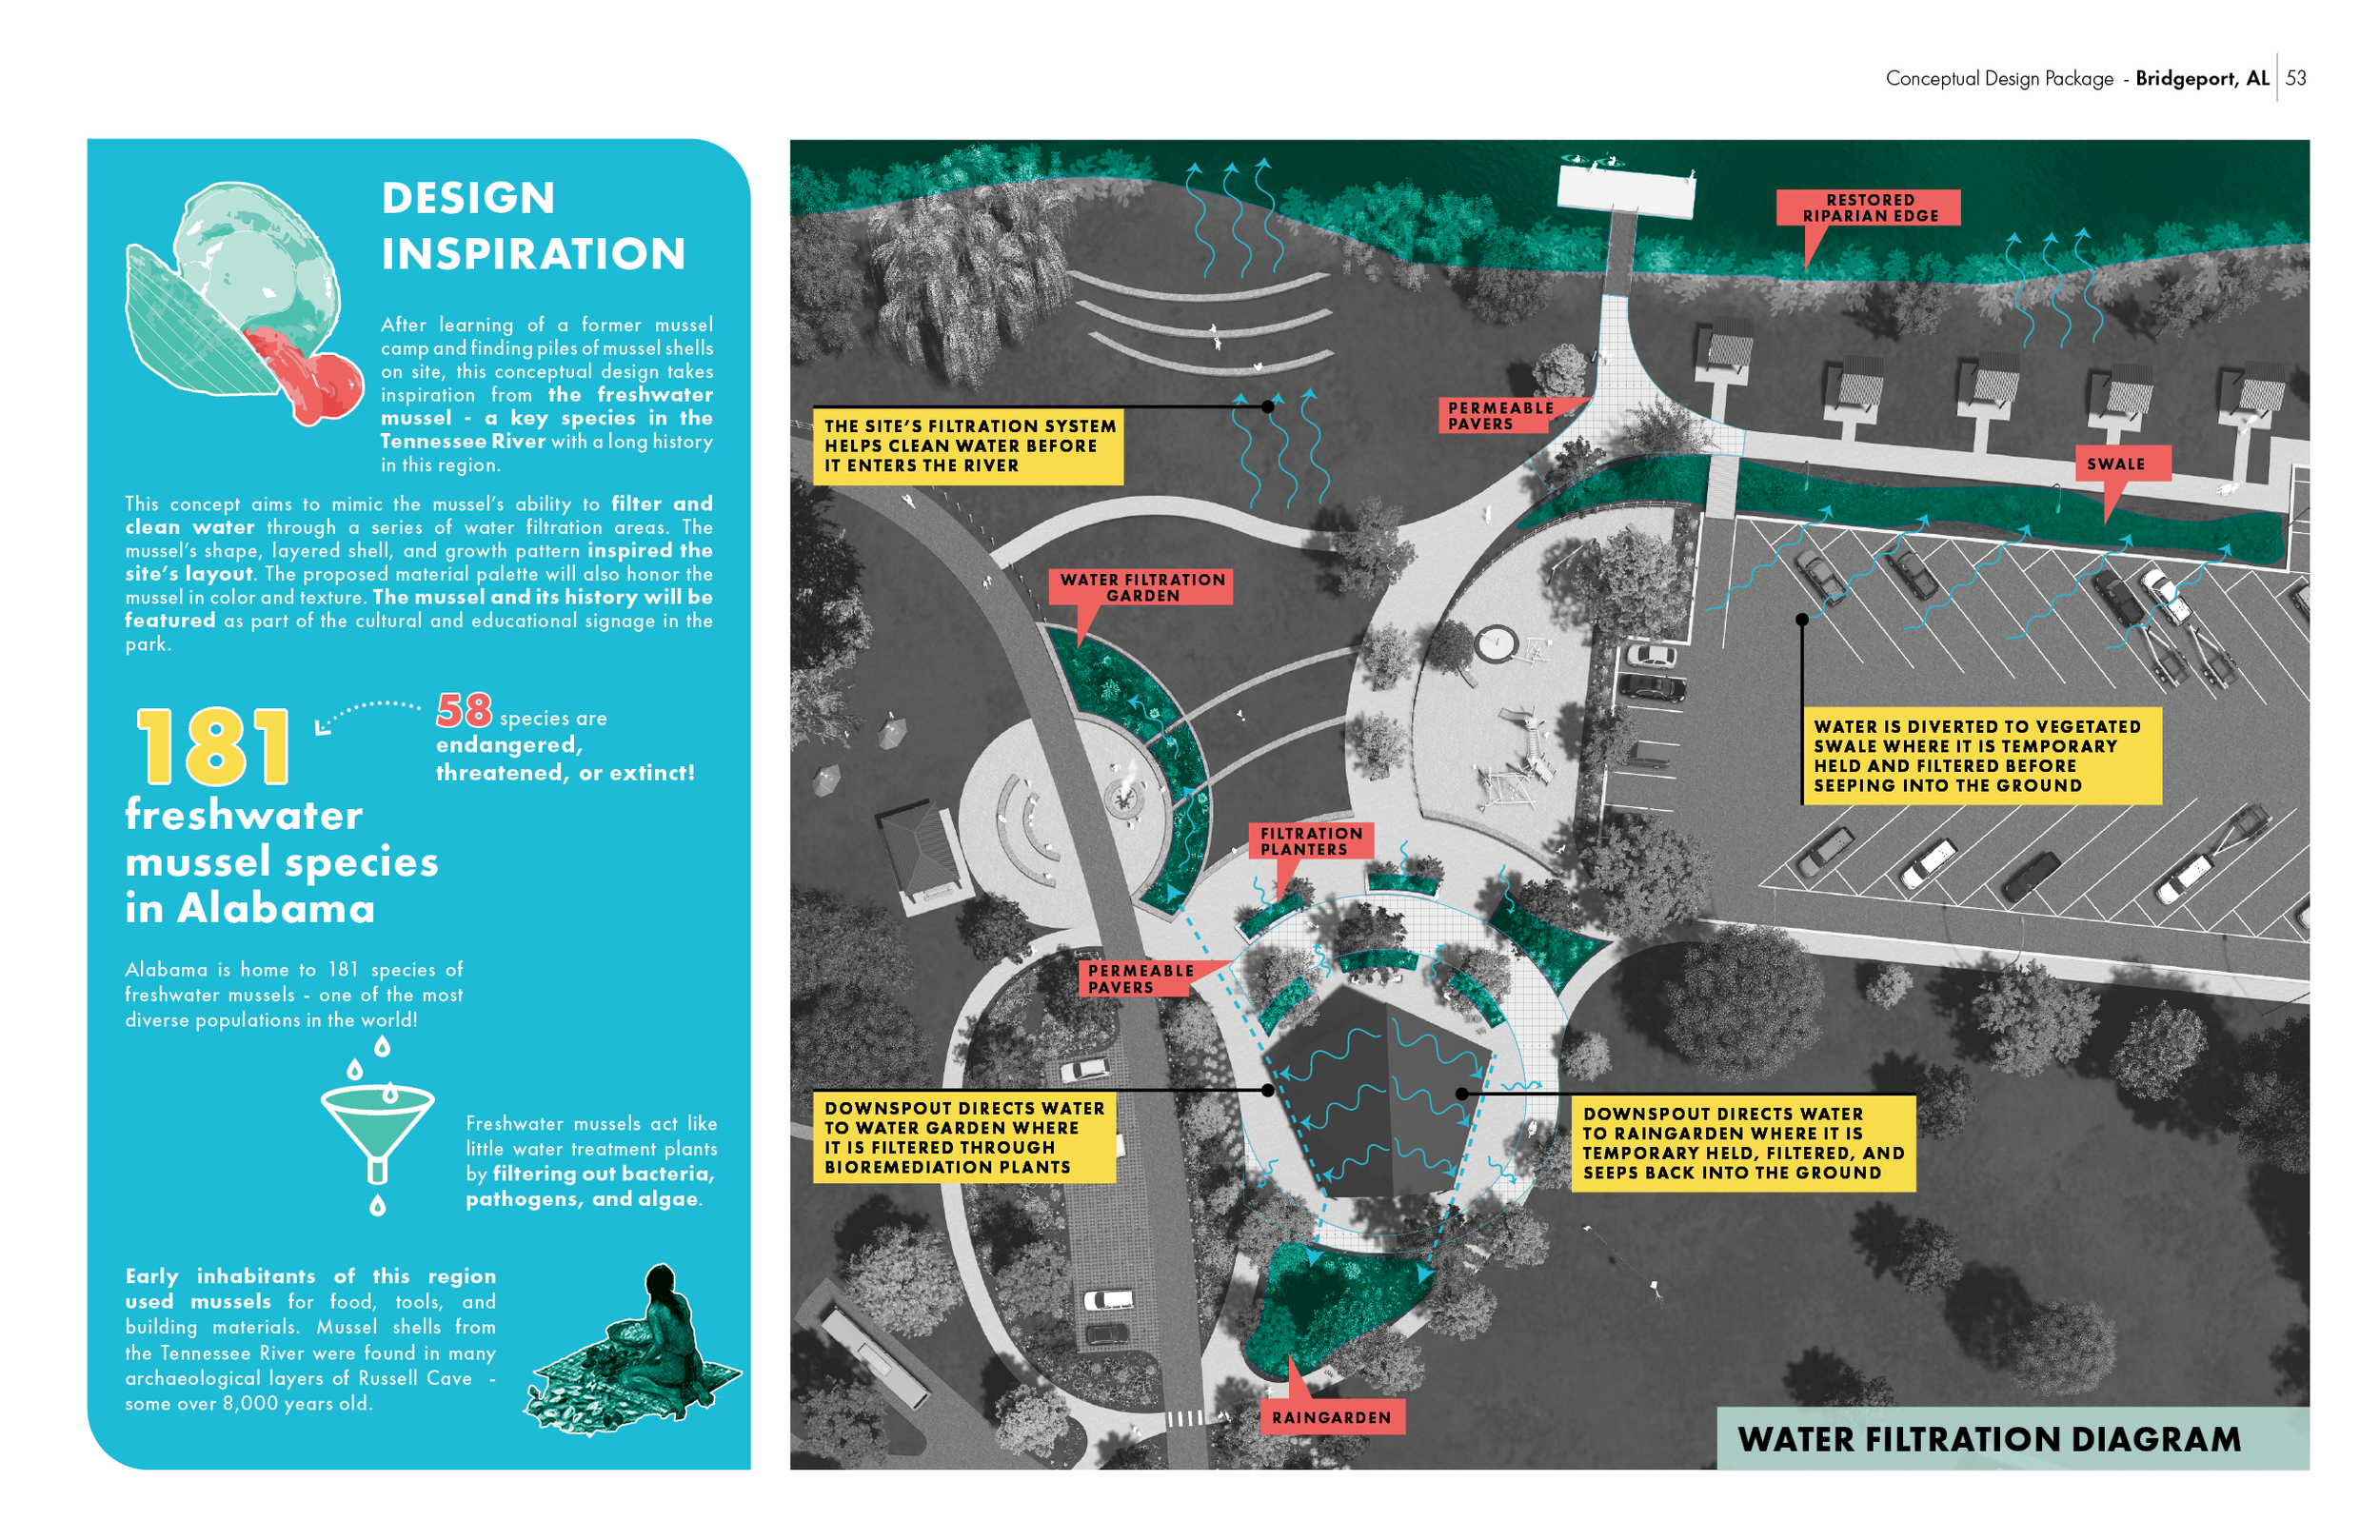 Bridgeport - Conceptual Design Package3.png